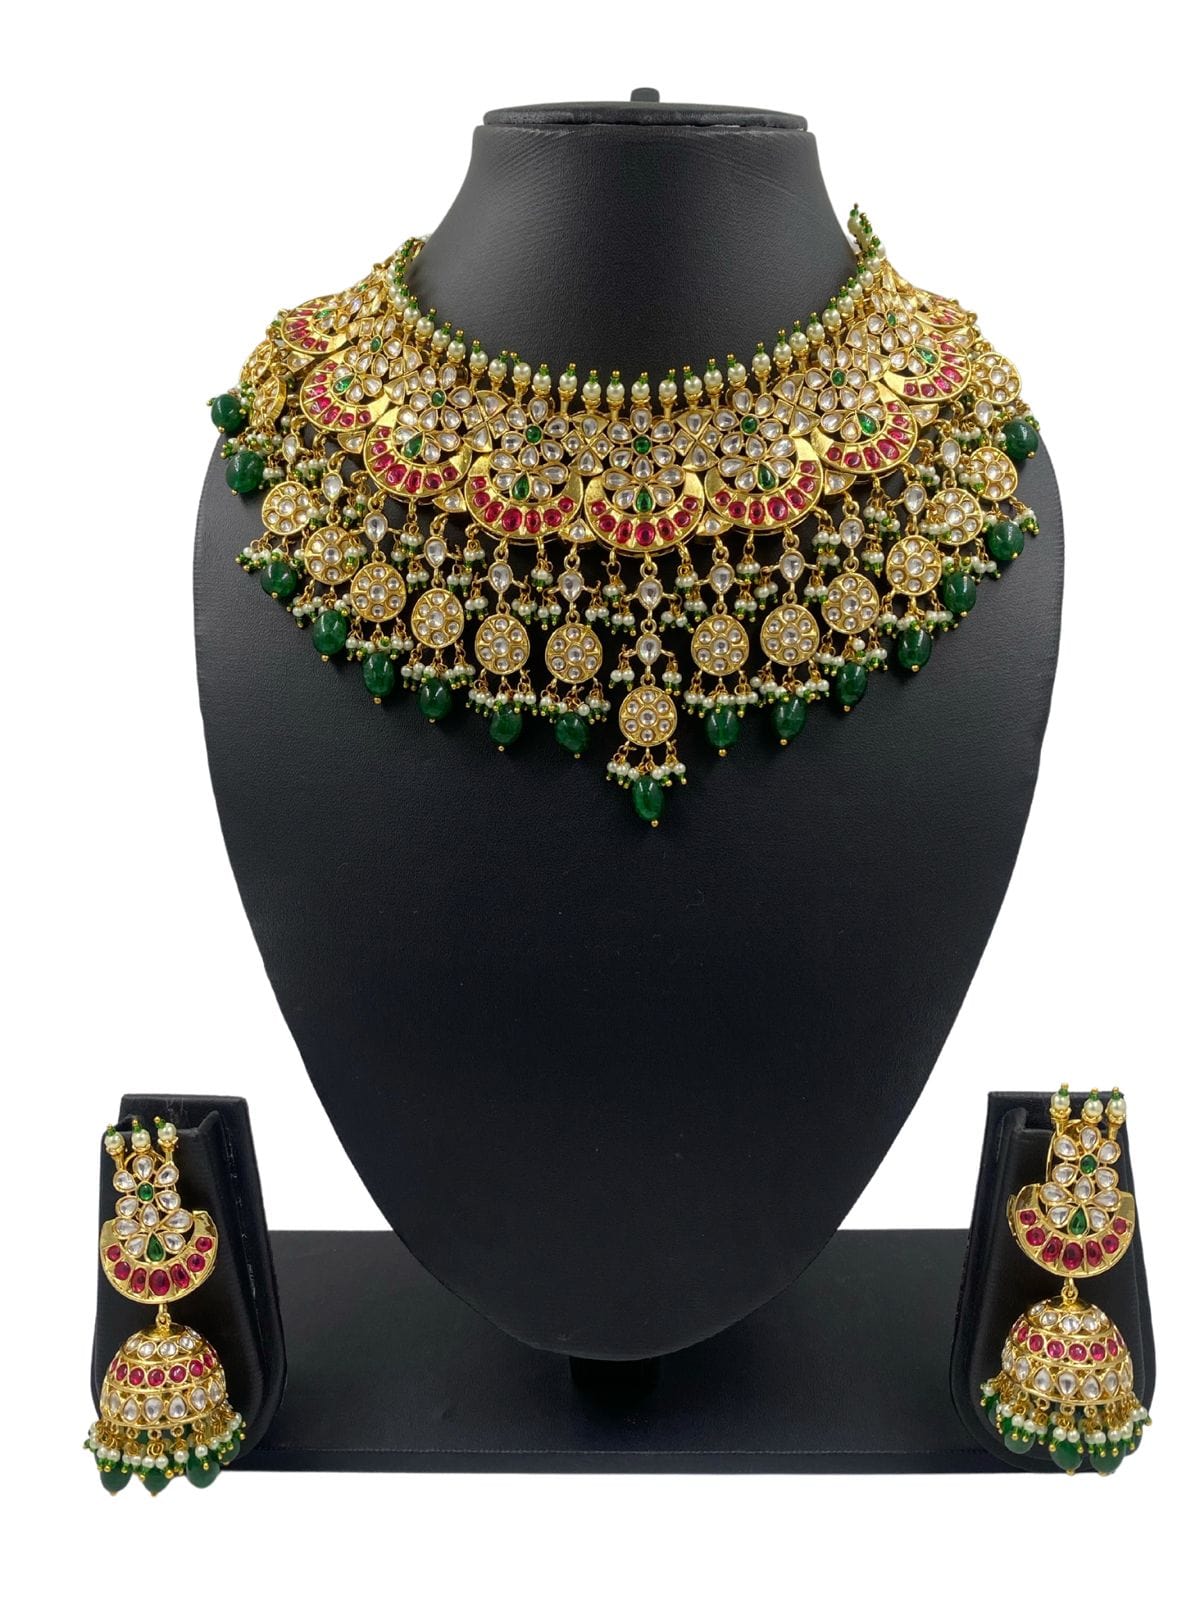 Designer Heavy Quality Polki Kundan Bridal Jewellery Necklace Set By Gehna Shop Bridal Necklace Sets